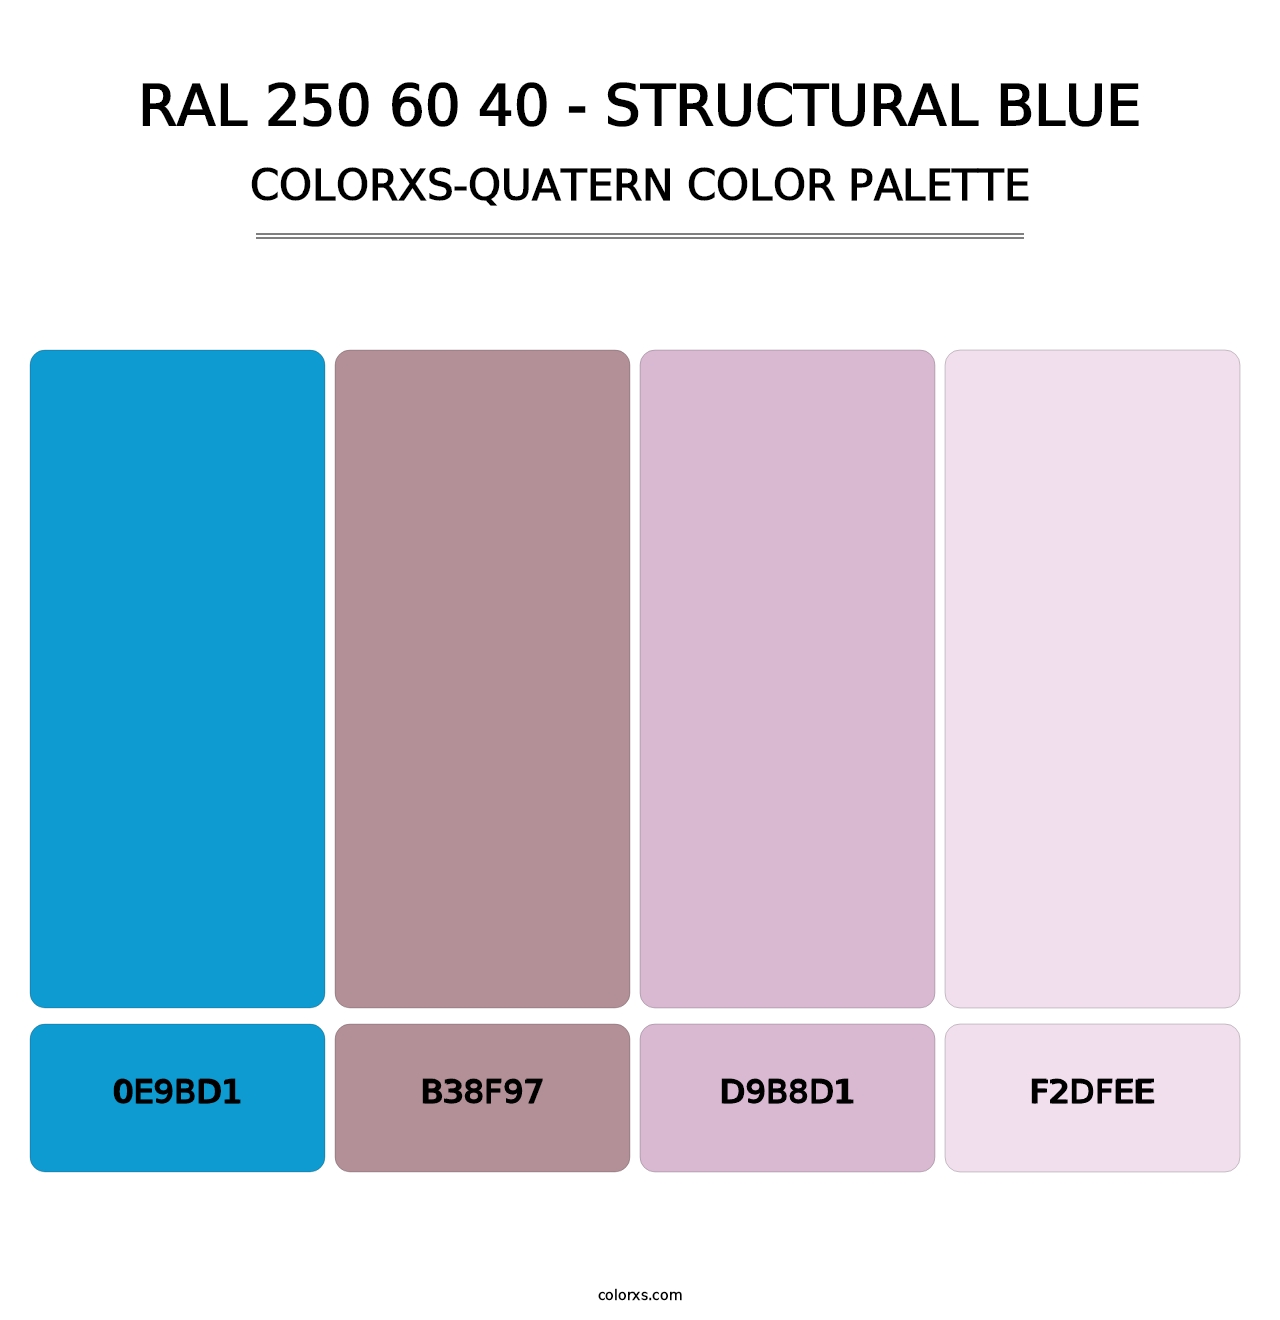 RAL 250 60 40 - Structural Blue - Colorxs Quatern Palette